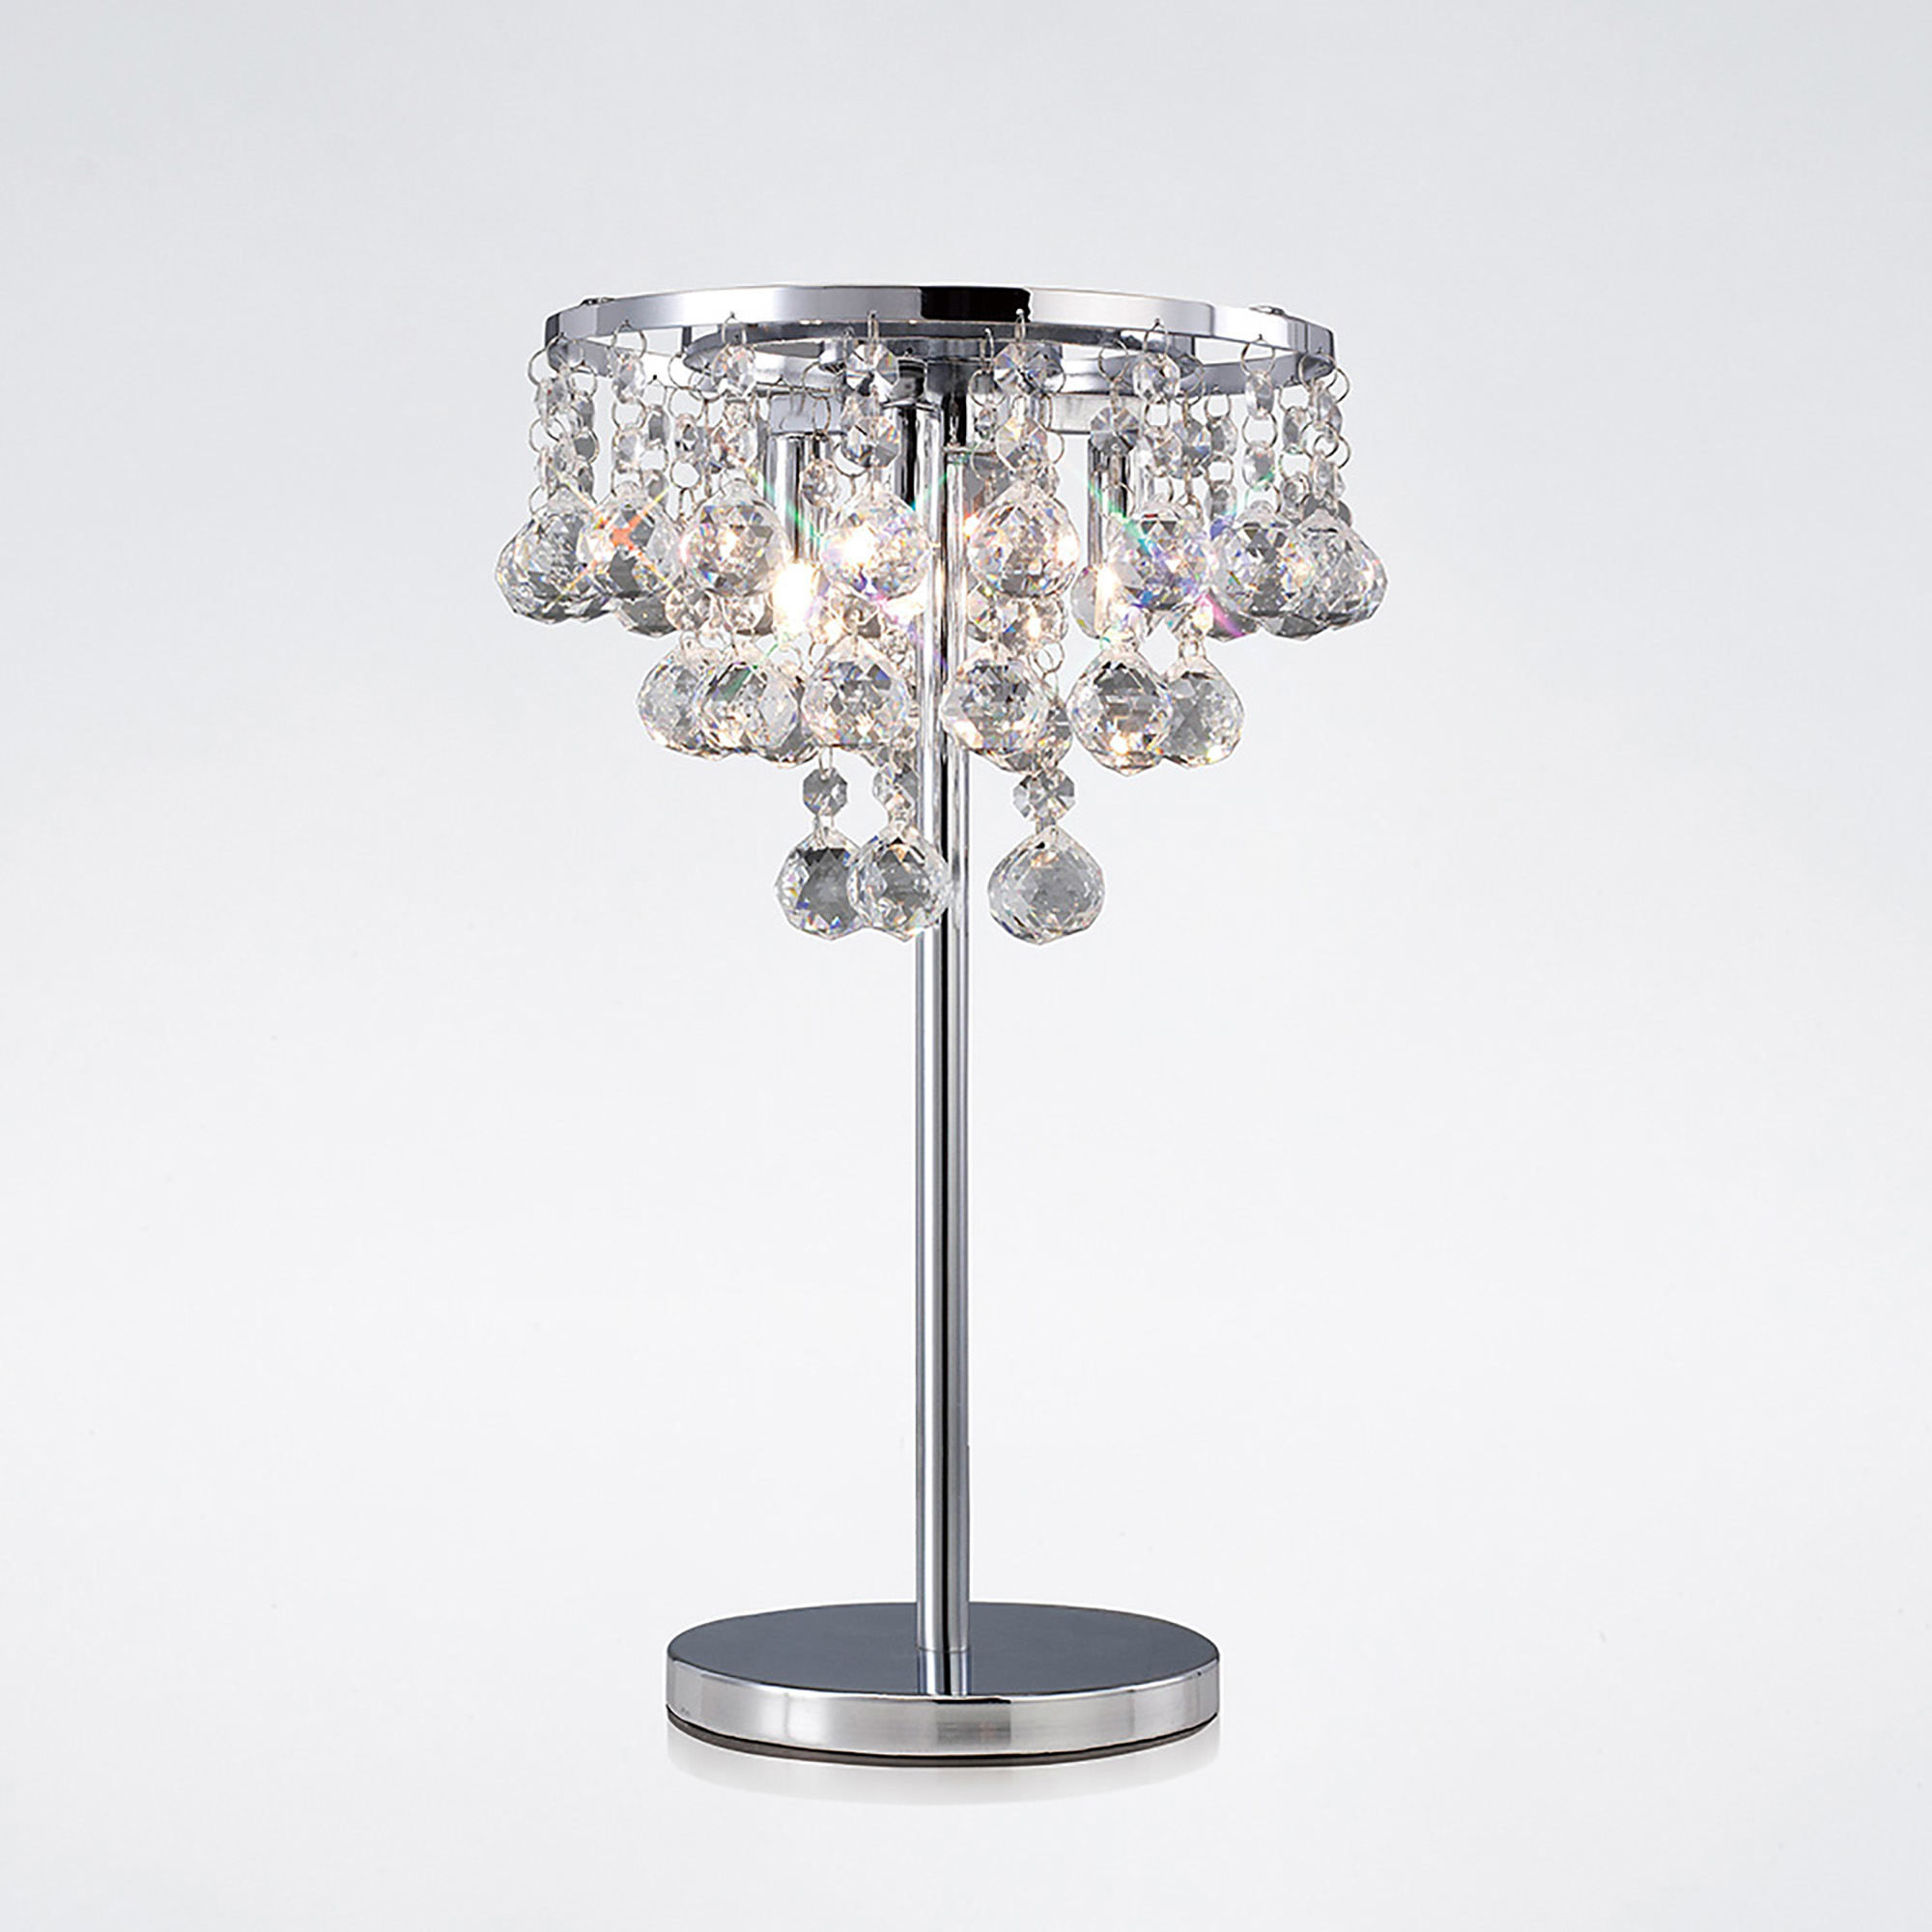 IL30028  Atla Crystal 40cm 3 Light Table Lamp Polished Chrome